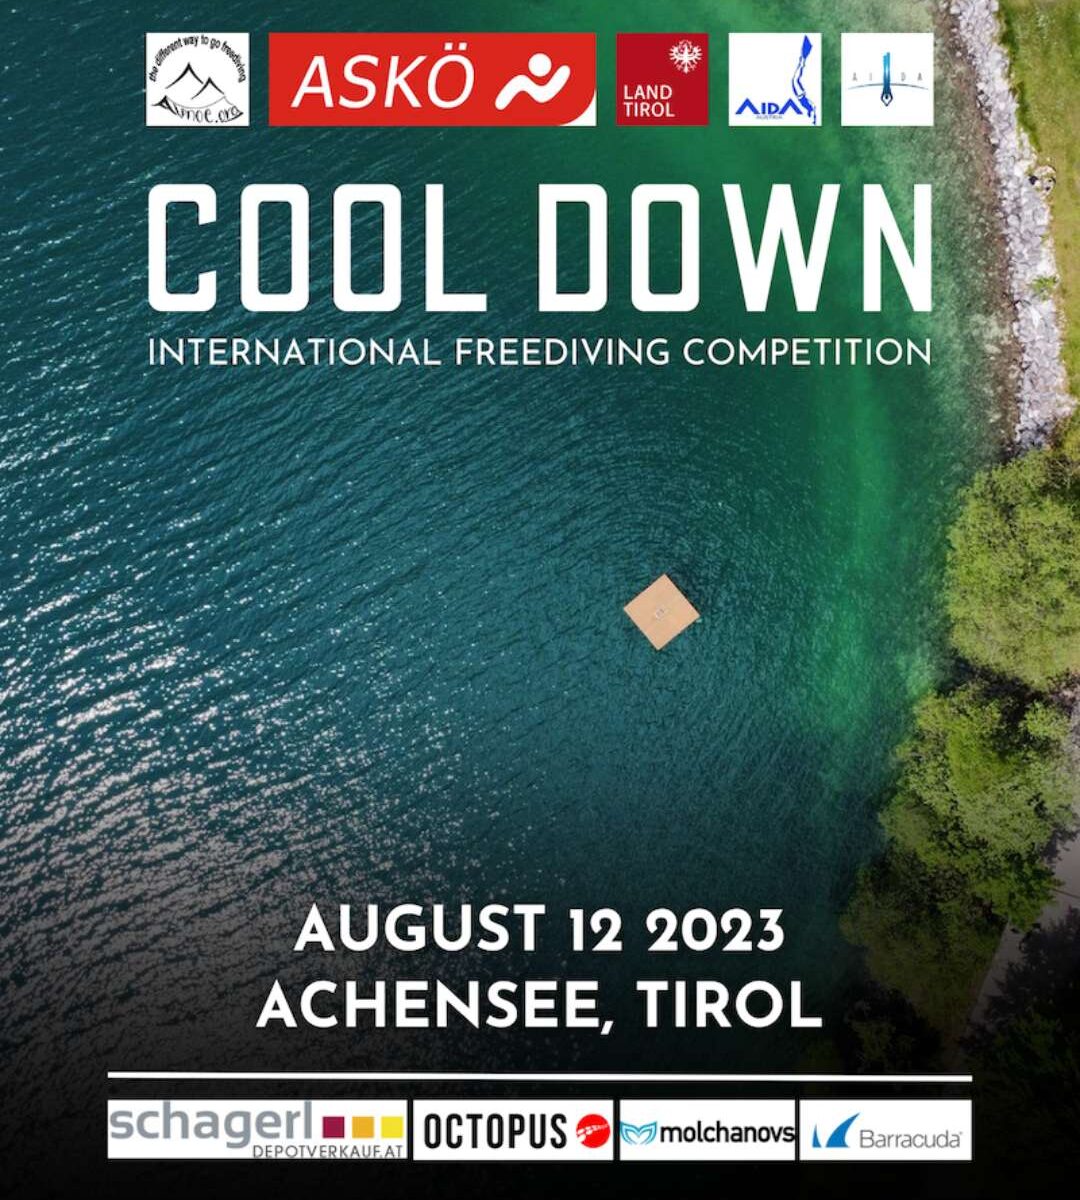 AIDA Cool Down 2023 Cover